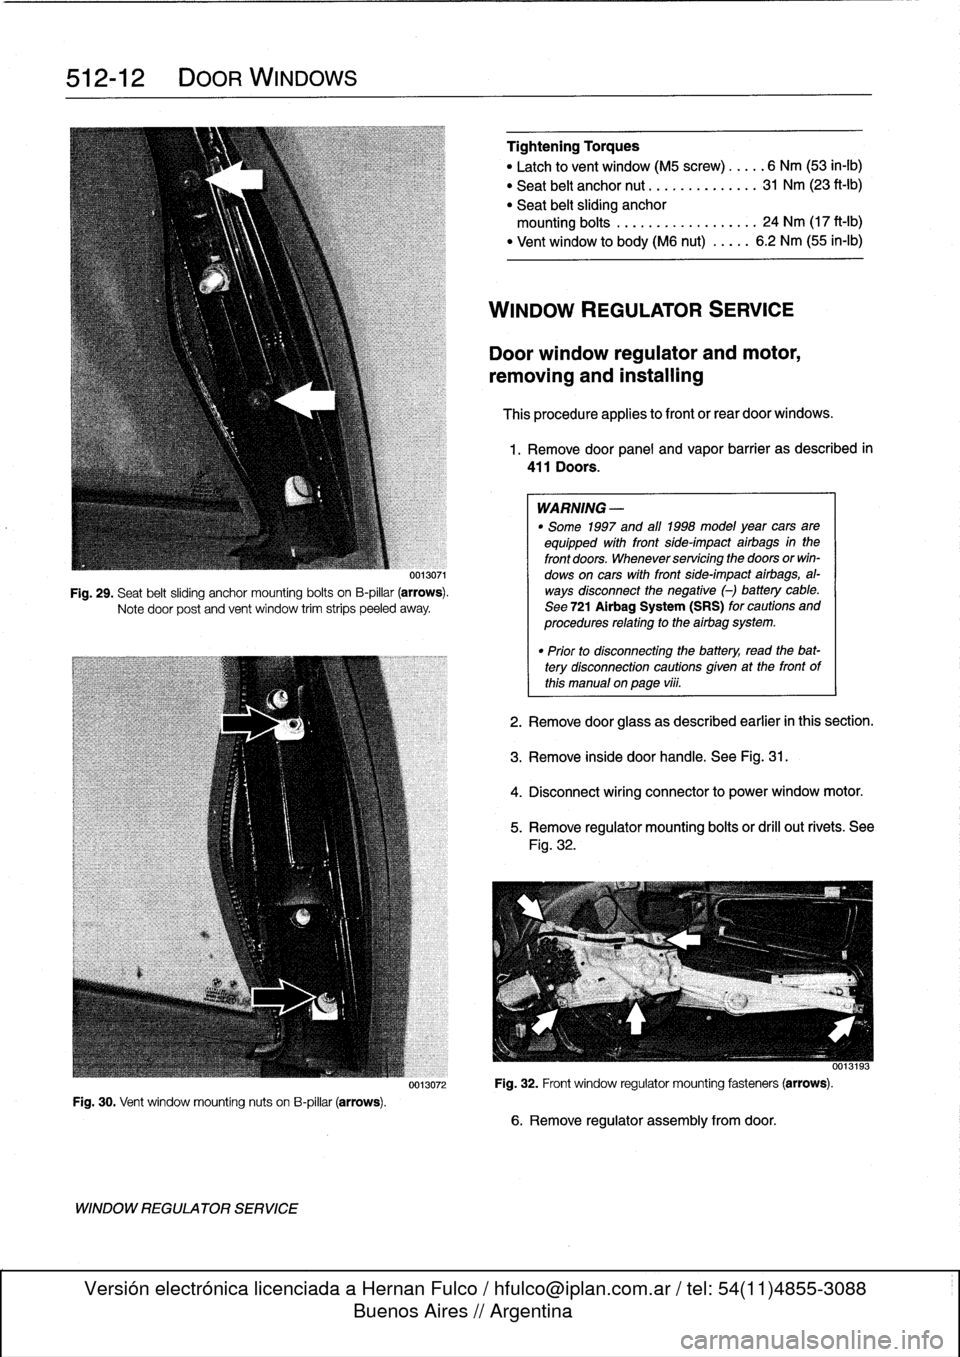 BMW 318i 1998 E36 Owners Manual 
512-
1
2

	

DOOR
WINDOWS

Fig
.
30
.
Vent
window
mounting
nuts
on
B-pillar
(arrows)
.

WINDOW
REGULATOR
SERVICE

0013071

Fig
.
29
.
Seat
belt
sliding
anchor
mounting
bolts
on
B-pillar
(arrows)
.

N